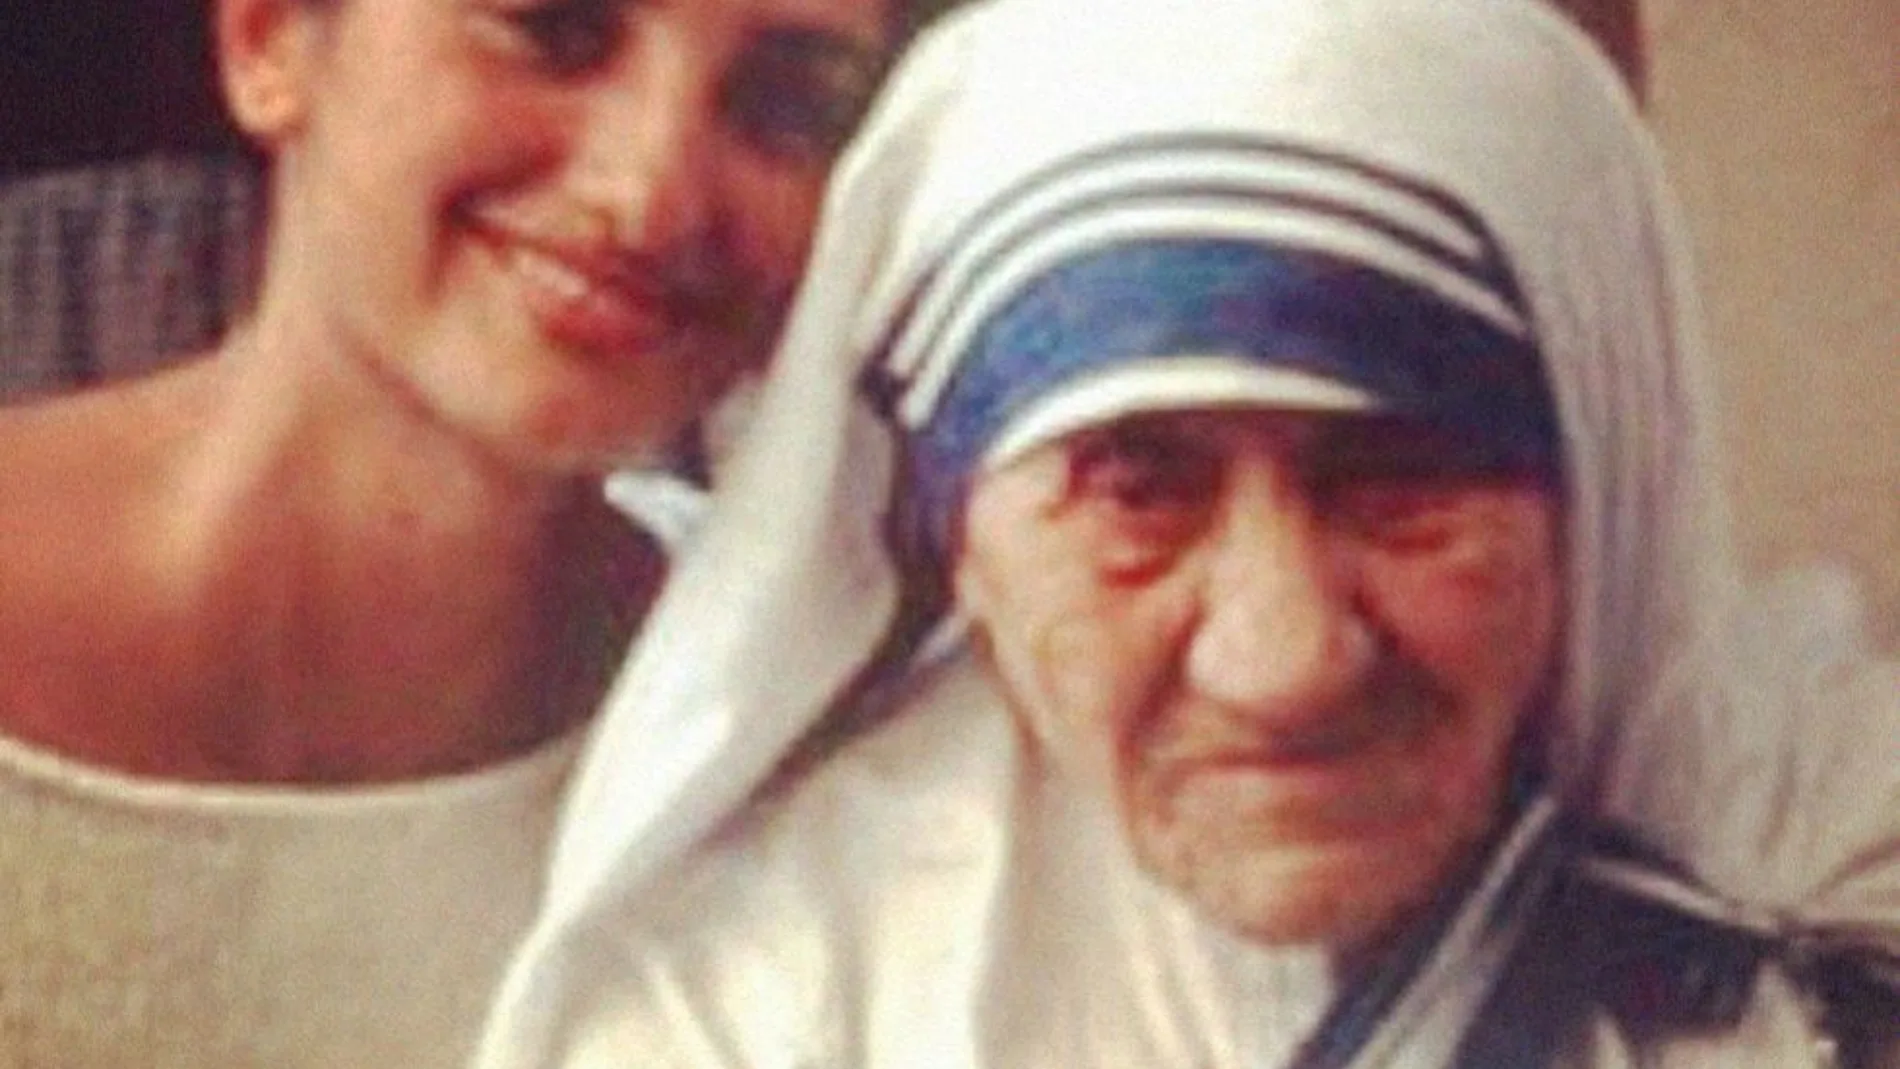 La Madre Teresa con Penélope Cruz